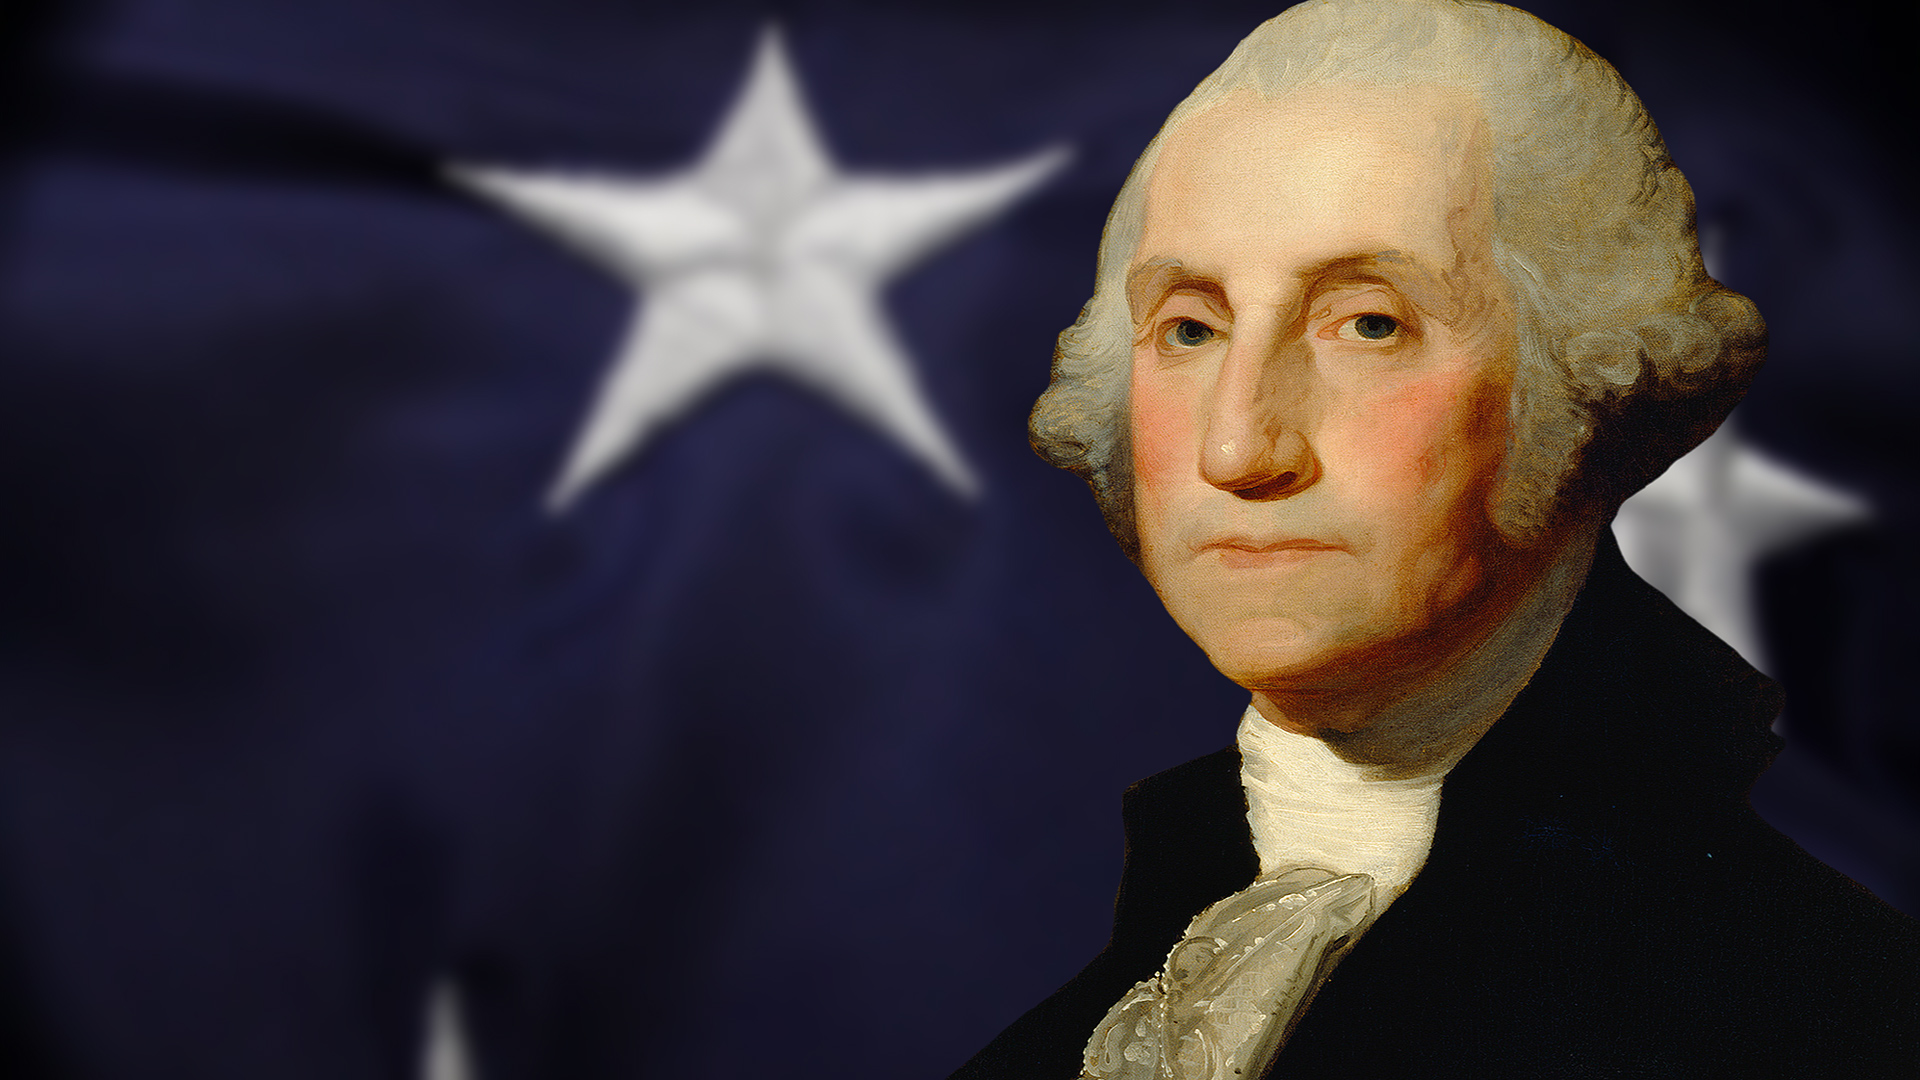 Featured image for “George Washington un grande de la historia.”